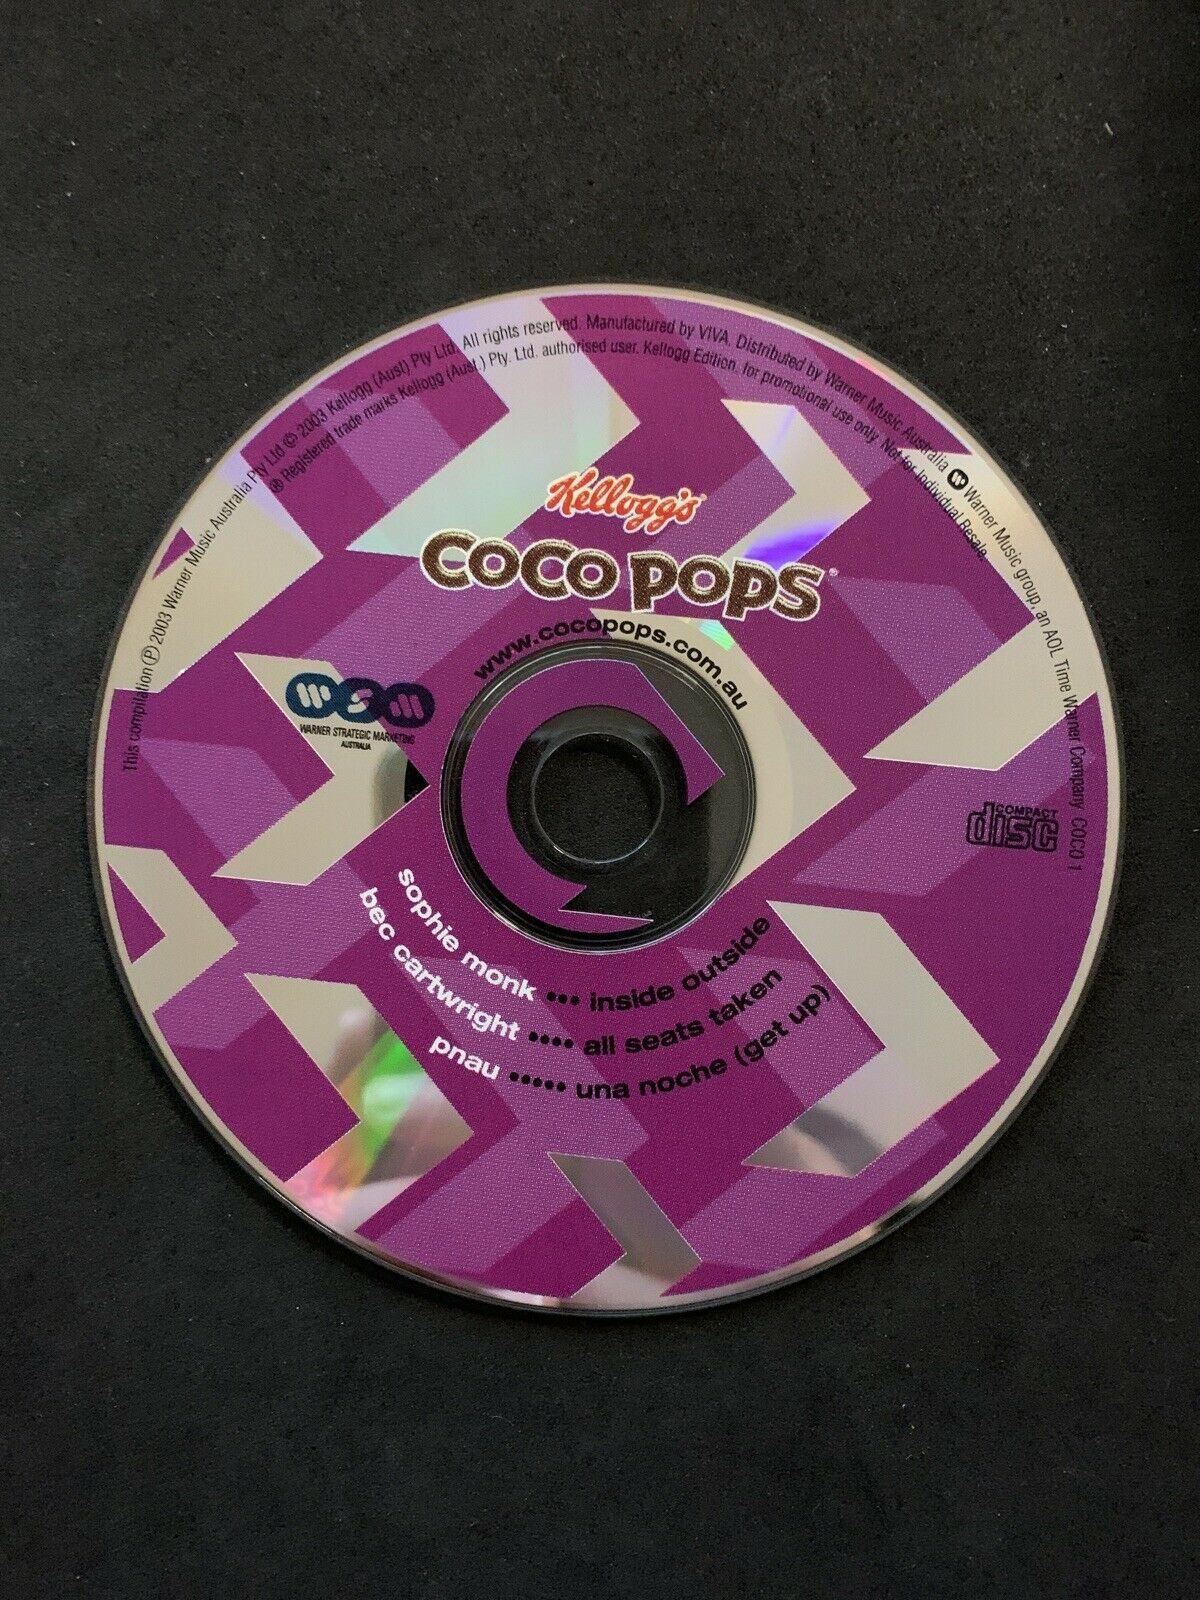 Kellogg's Coco Pops CD 2003 Promotion - Sophie Monk, Bec Cartwright, Pnau